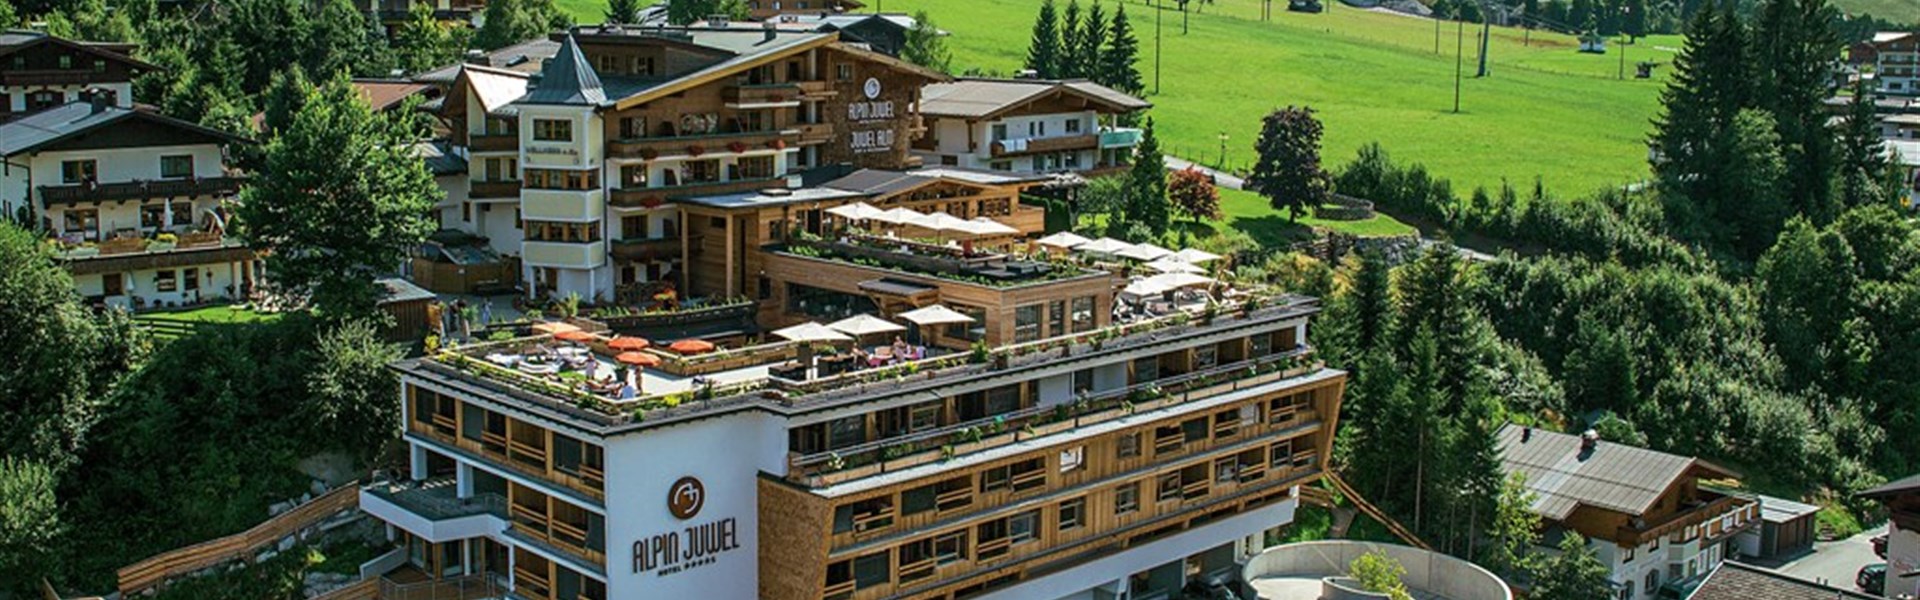 Marco Polo - Hotel Alpin Juwel (S) - 